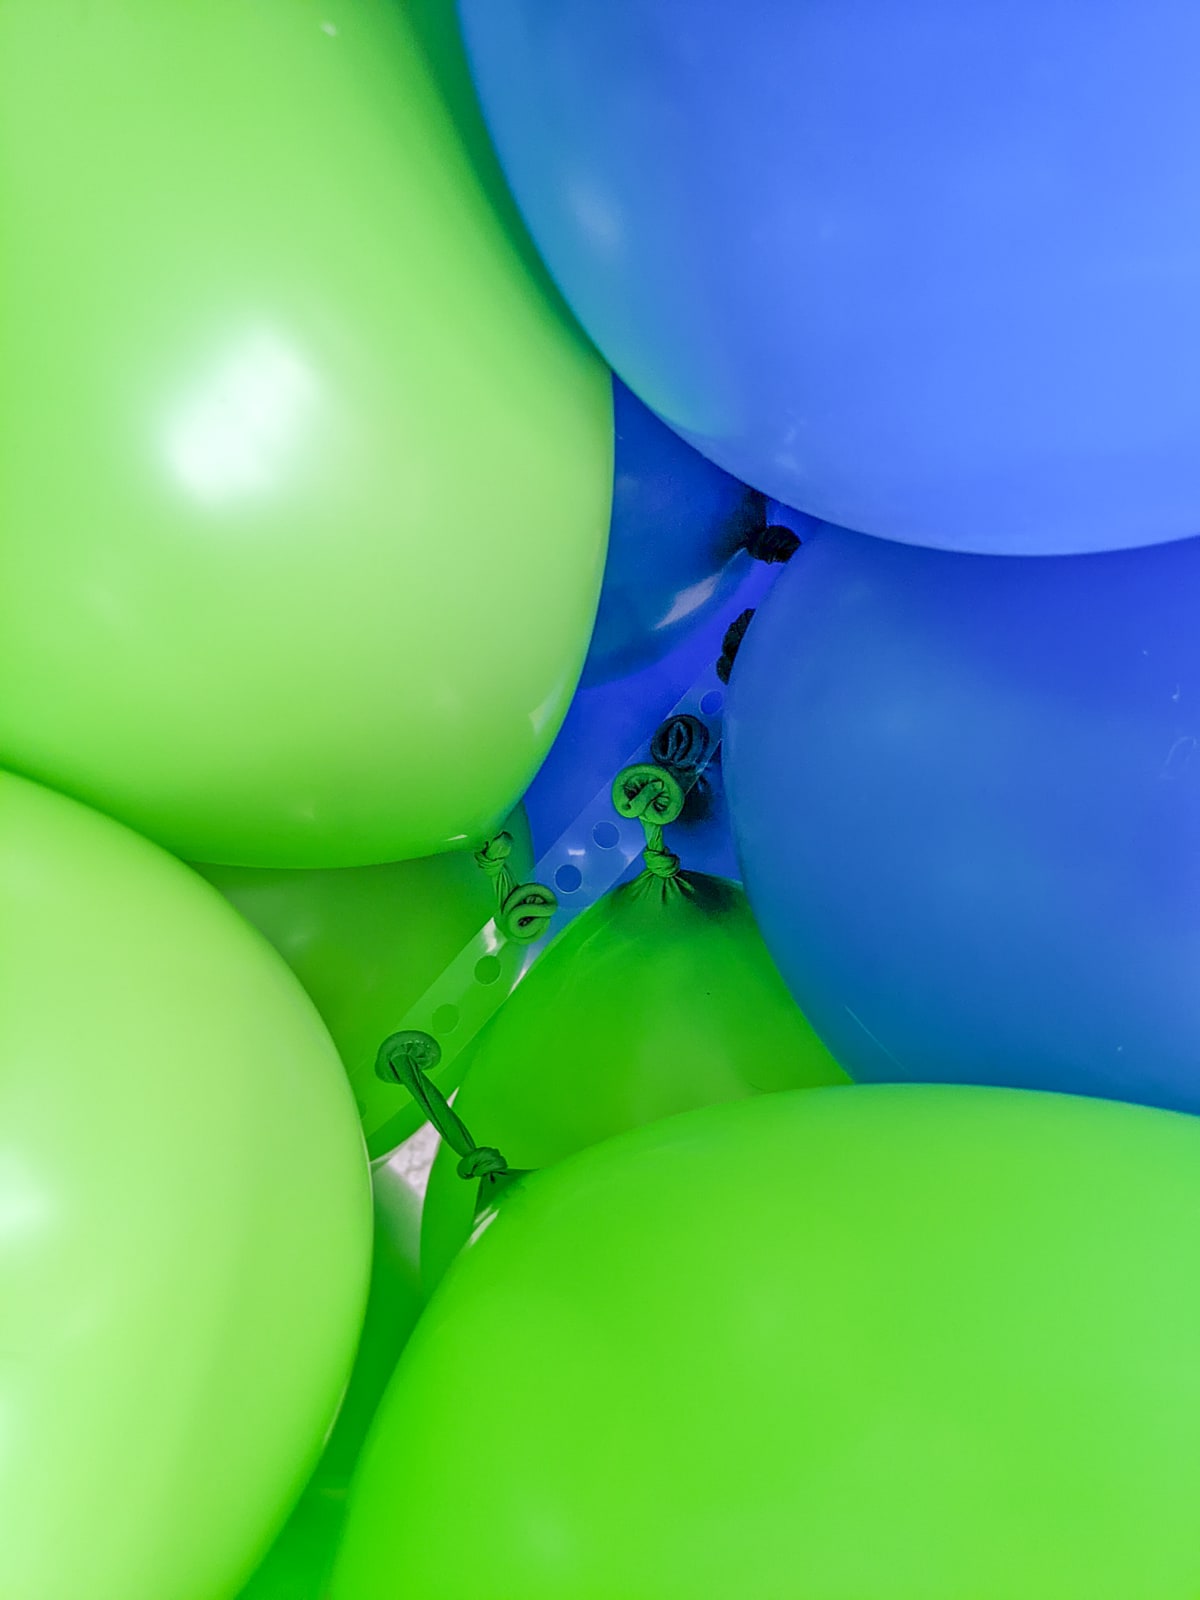 attaching balloons for a DIY balloon arch